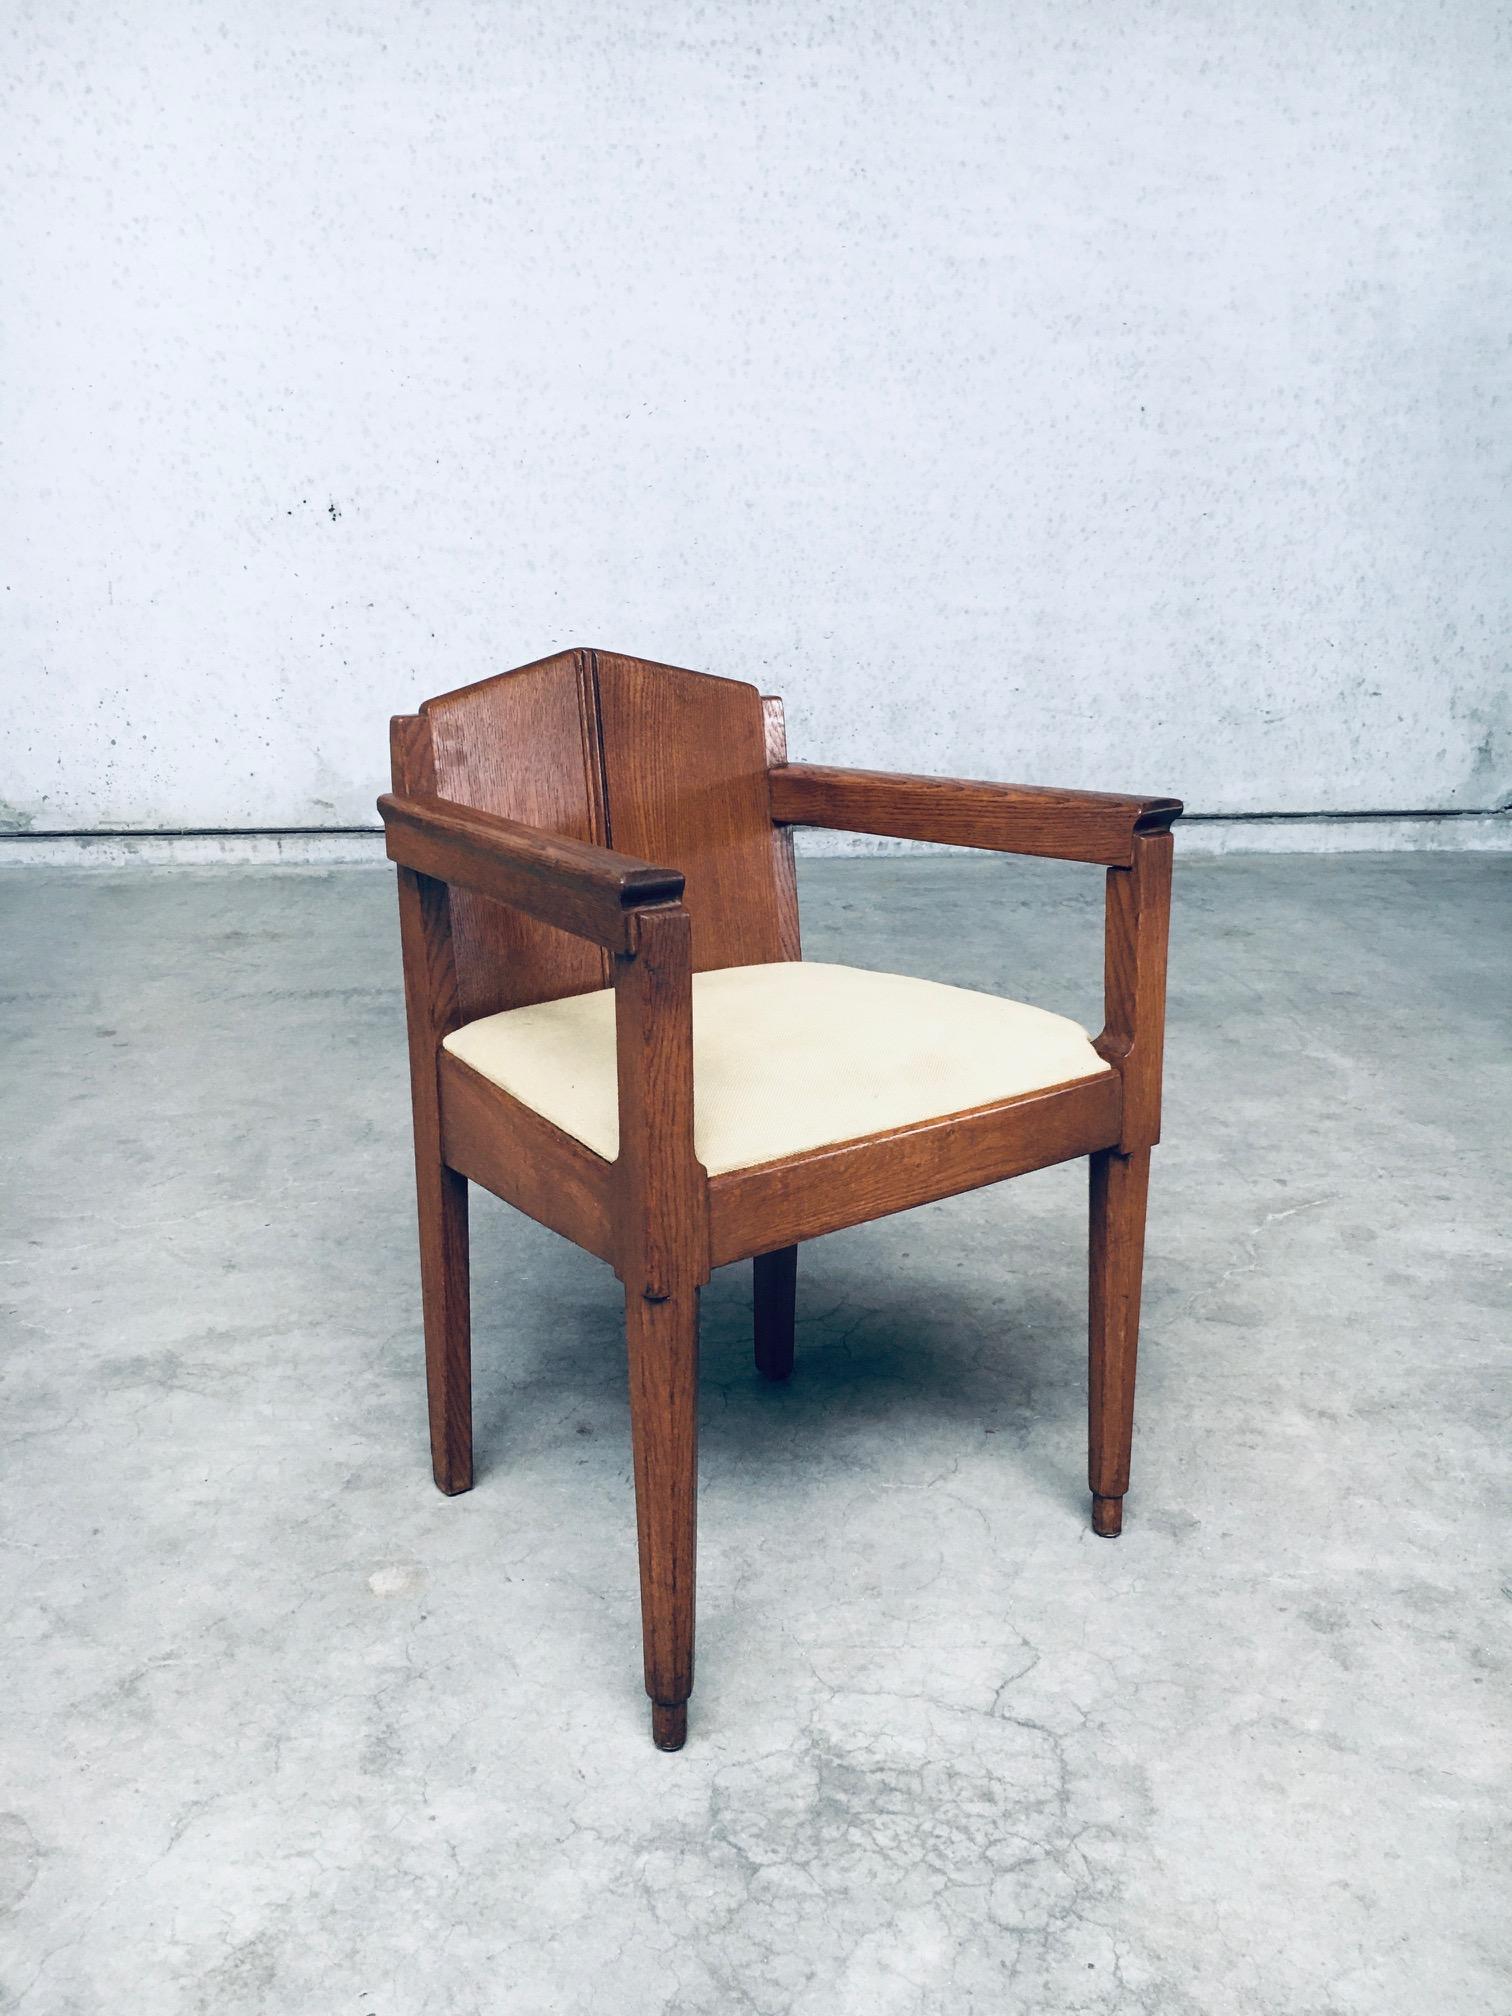 1910's Dutch Modernism Design Amsterdam School Dining Chair set For Sale 1